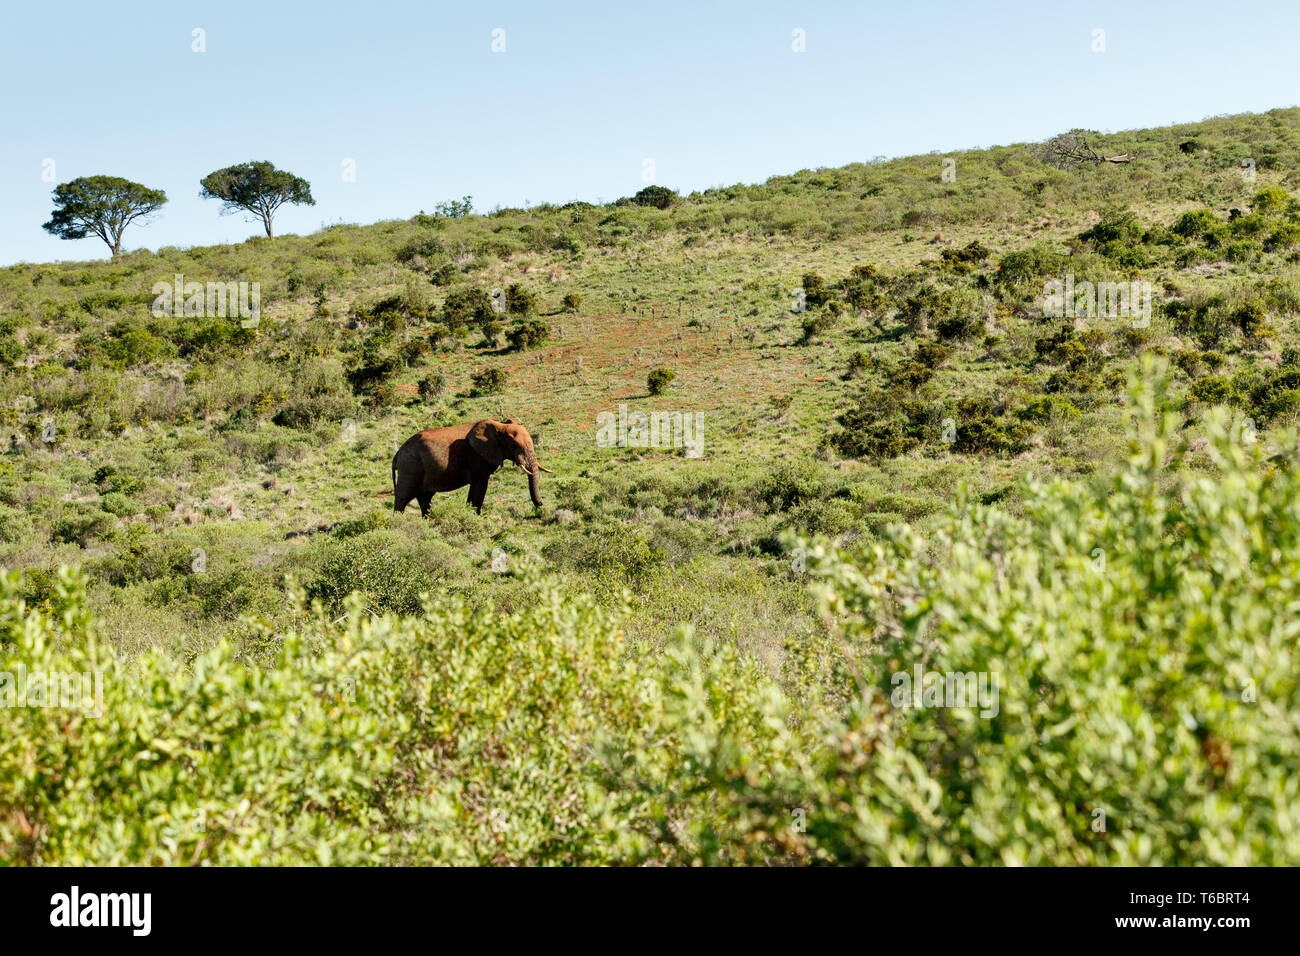 Bush Elephant walking uphill Stock Photo